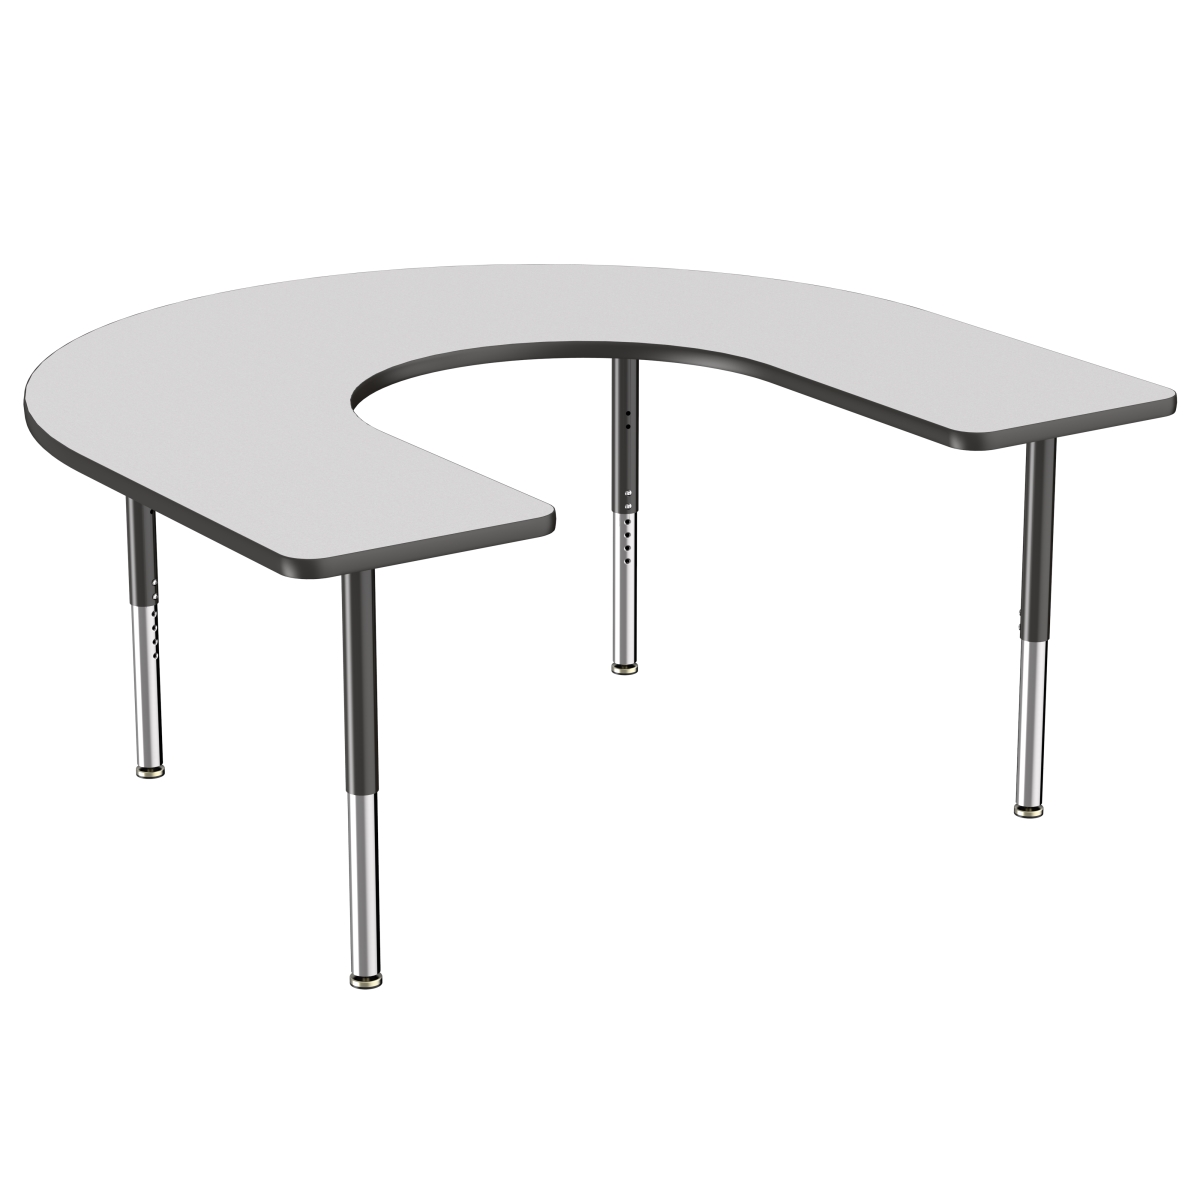 10096-gybk 60 X 66 In. Horseshoe T-mold Adjustable Activity Table With Super Leg - Grey & Black